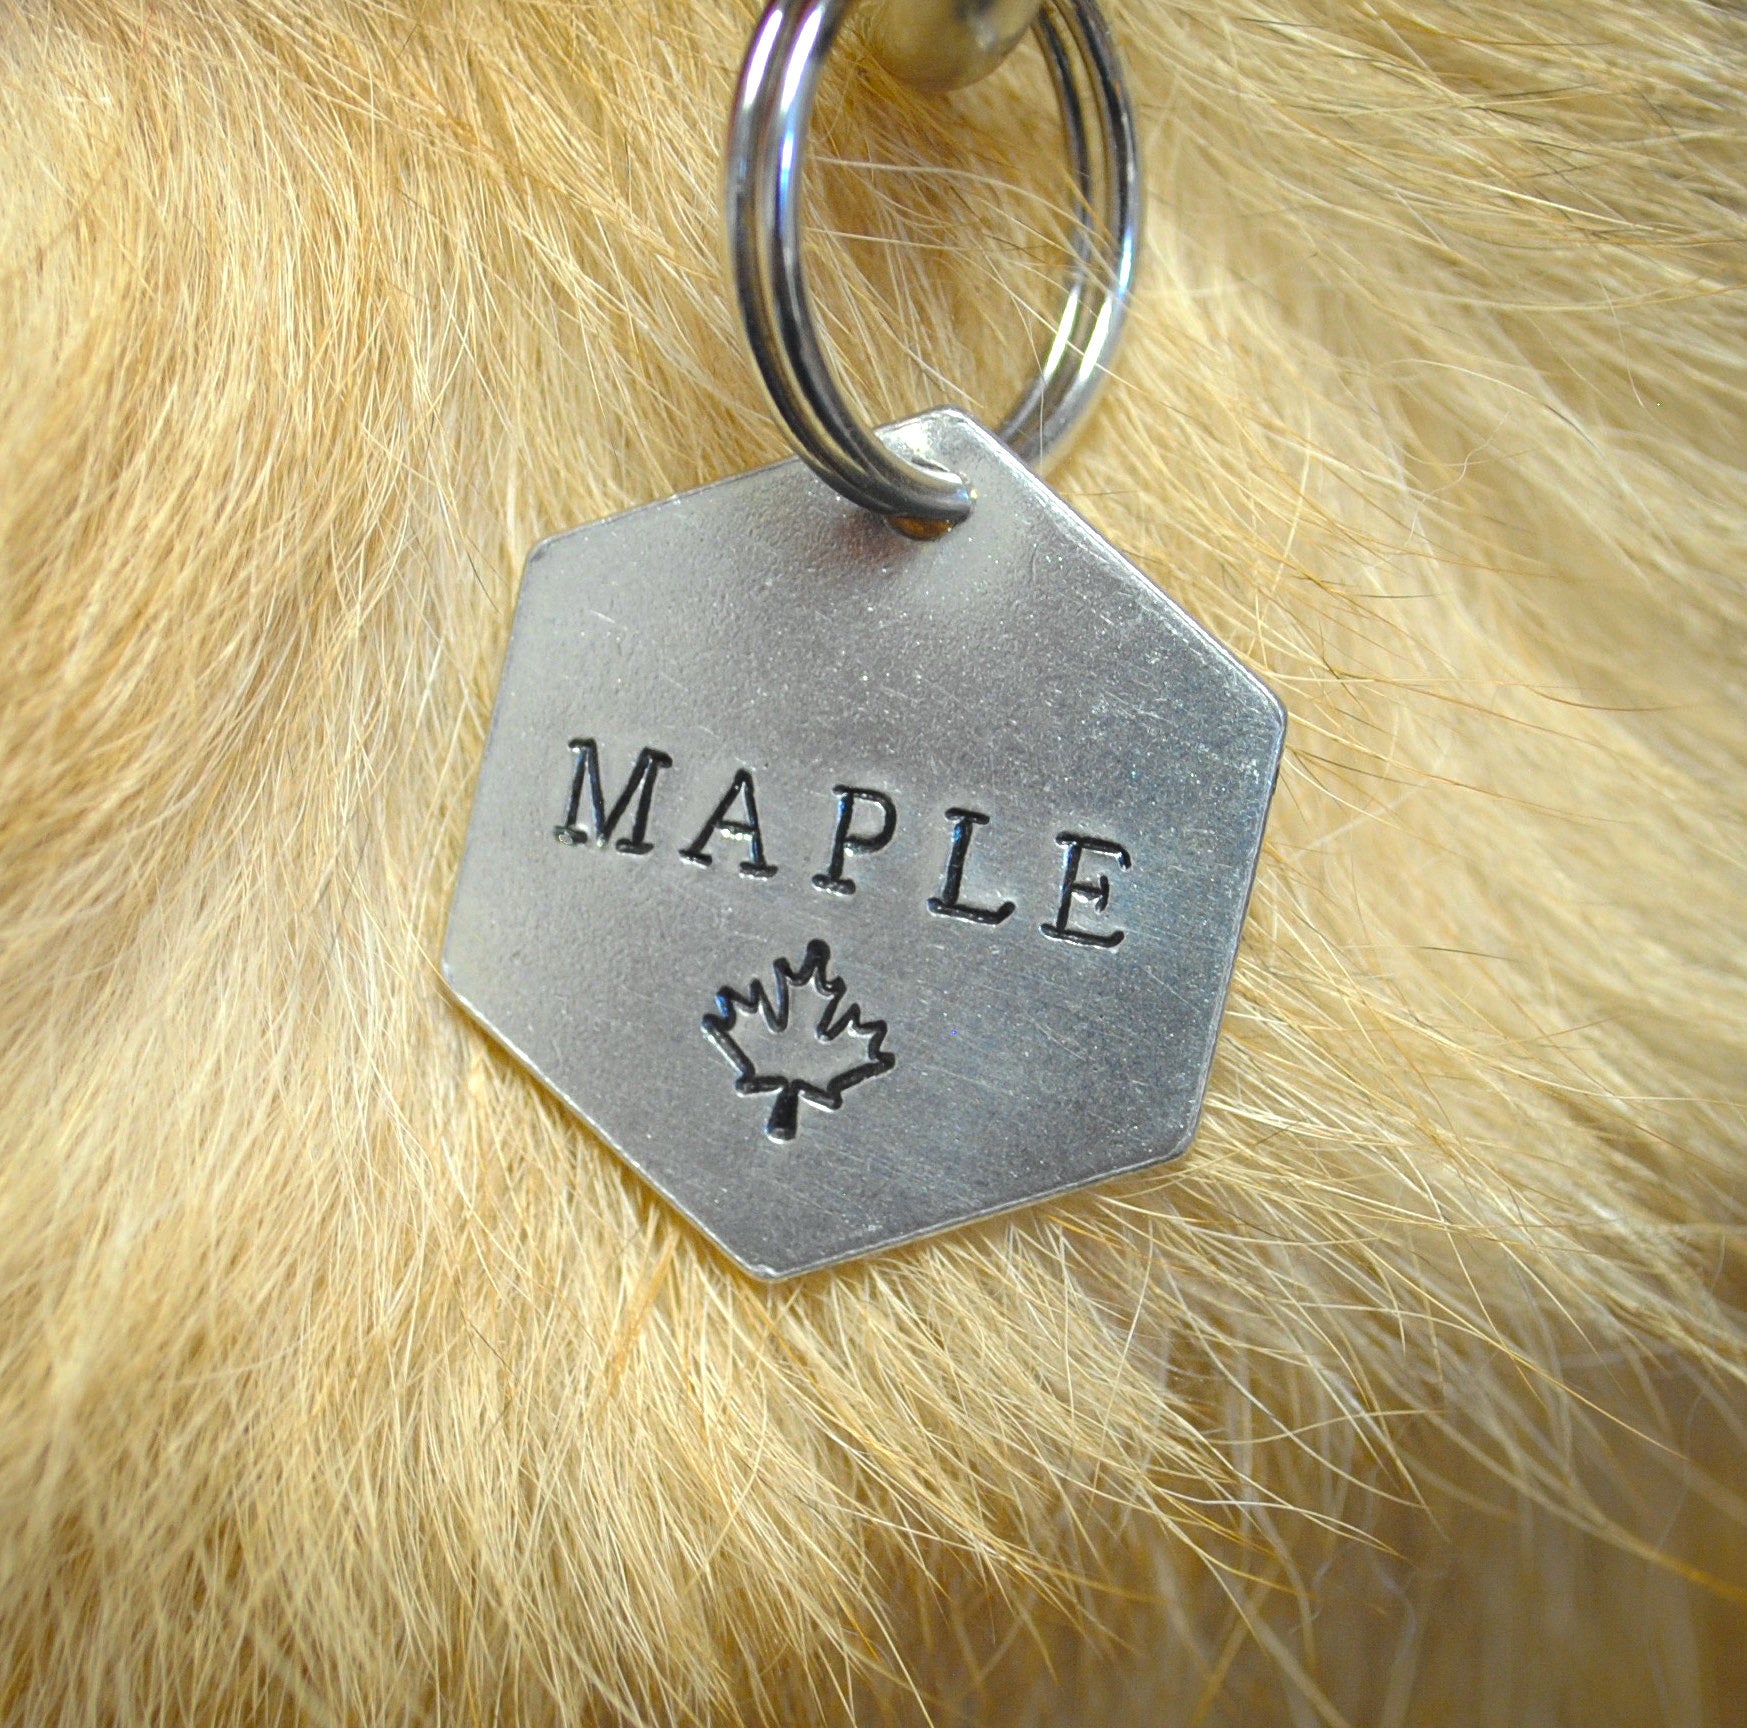 Personalized Dog Tag - Maple Leaf Design Engraved Dog Tag - Cat ID Tag - Dog Collar Tag - Custom Dog Tag - Pet ID Tag - Pet Name Tag - Maple Leaf Dog Tag - Nature Themed Dog Tag - Dog Gear - Dog Accessories - Pet Accessories - Canadian - Canada Day - Handmade Gift - Canadian Gift - Canadian Made - Dog Tag - New Puppy 